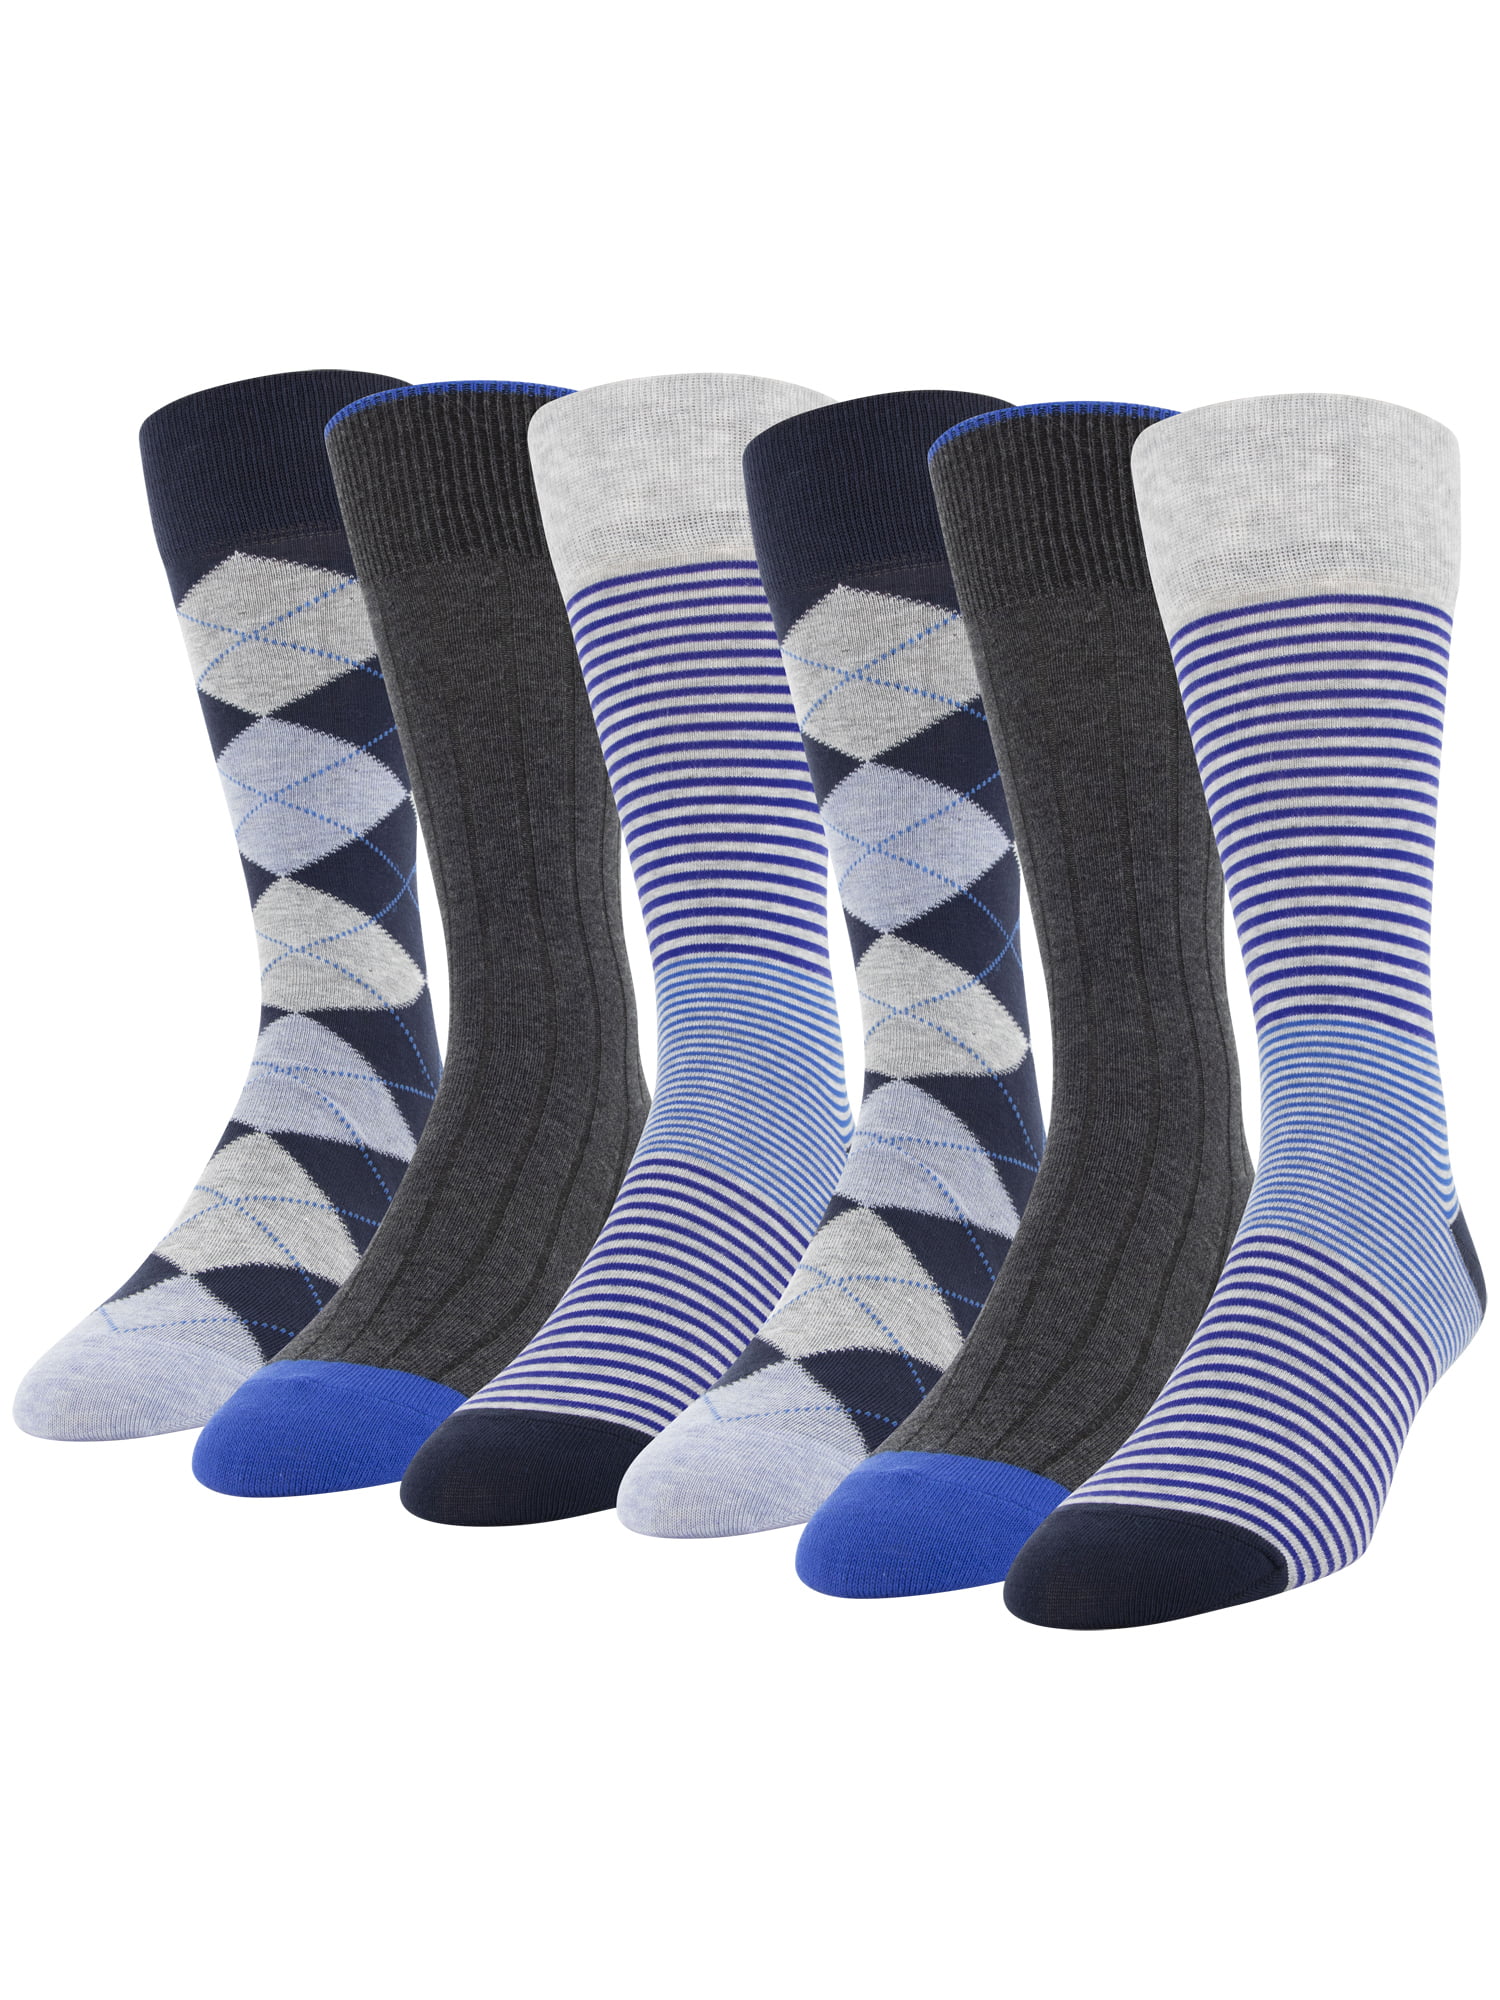 George Men's Color Block Stripe Crew Socks, 6 Pairs - Walmart.com